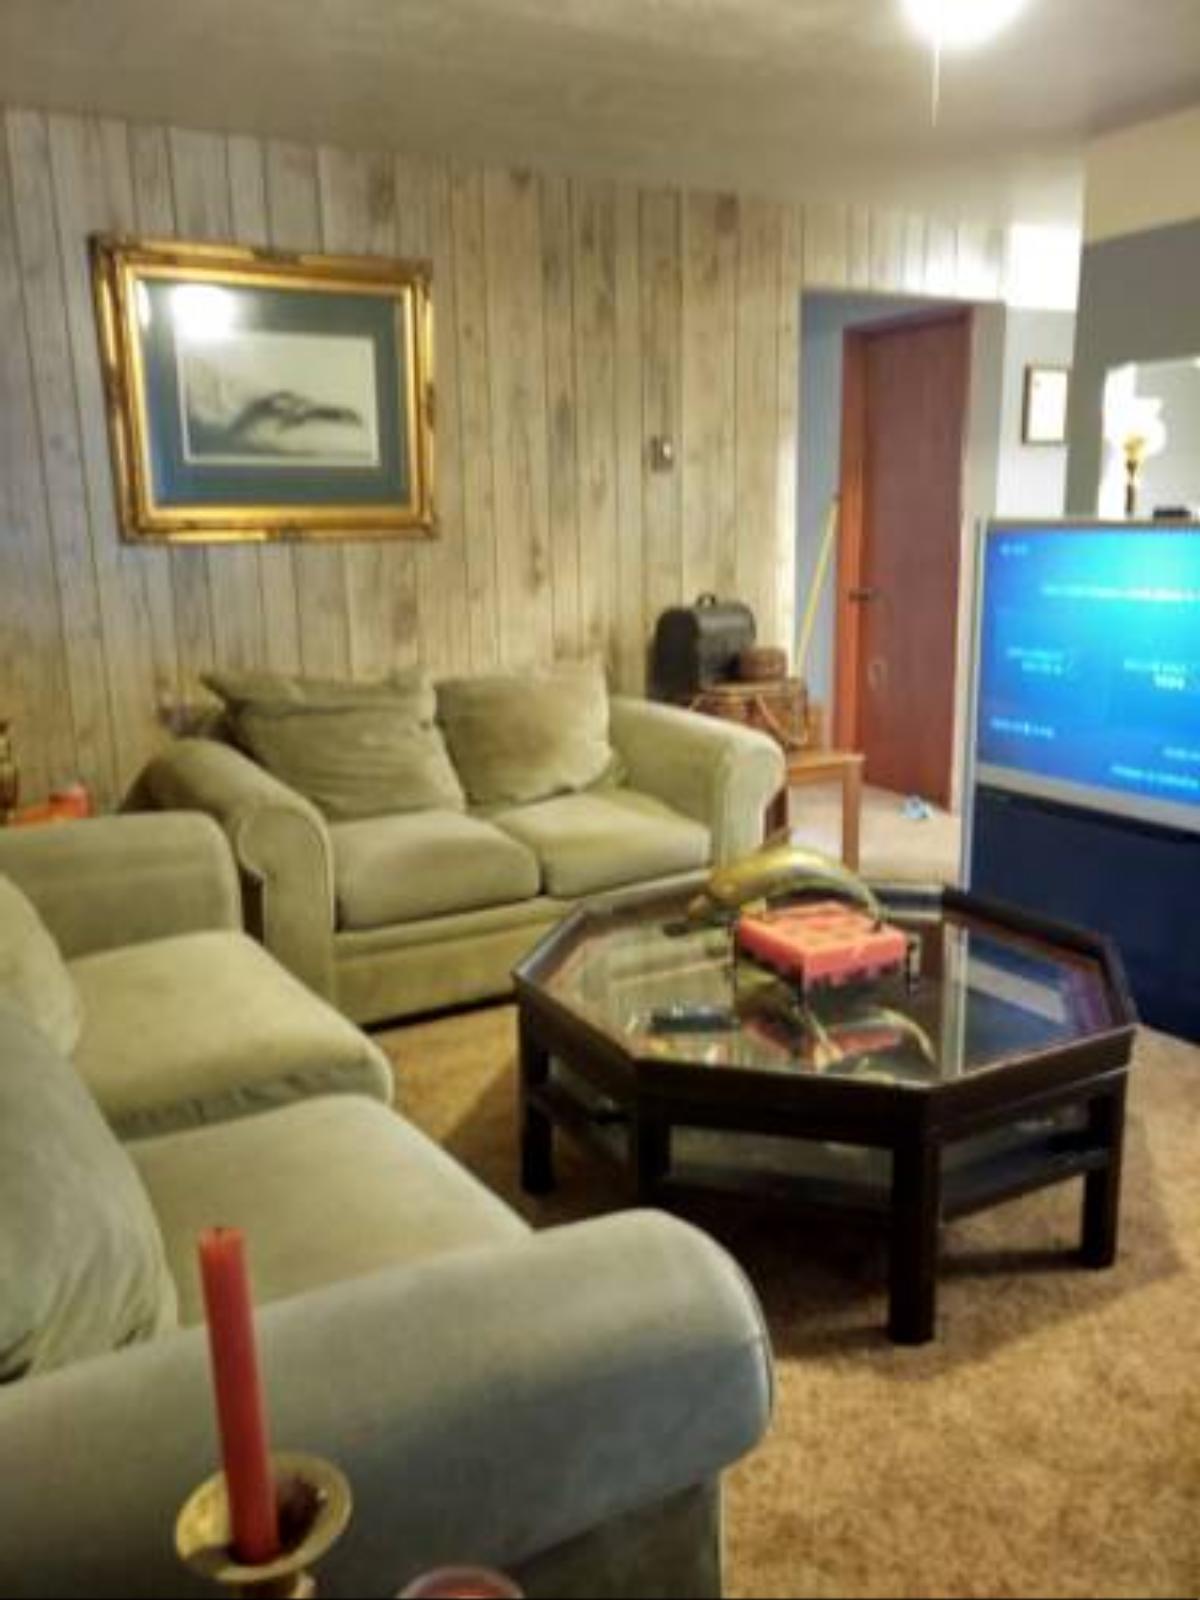 Pelzel's Port North Cove WA Vacation Cabin Rental On A Whim Hotel Grayland USA